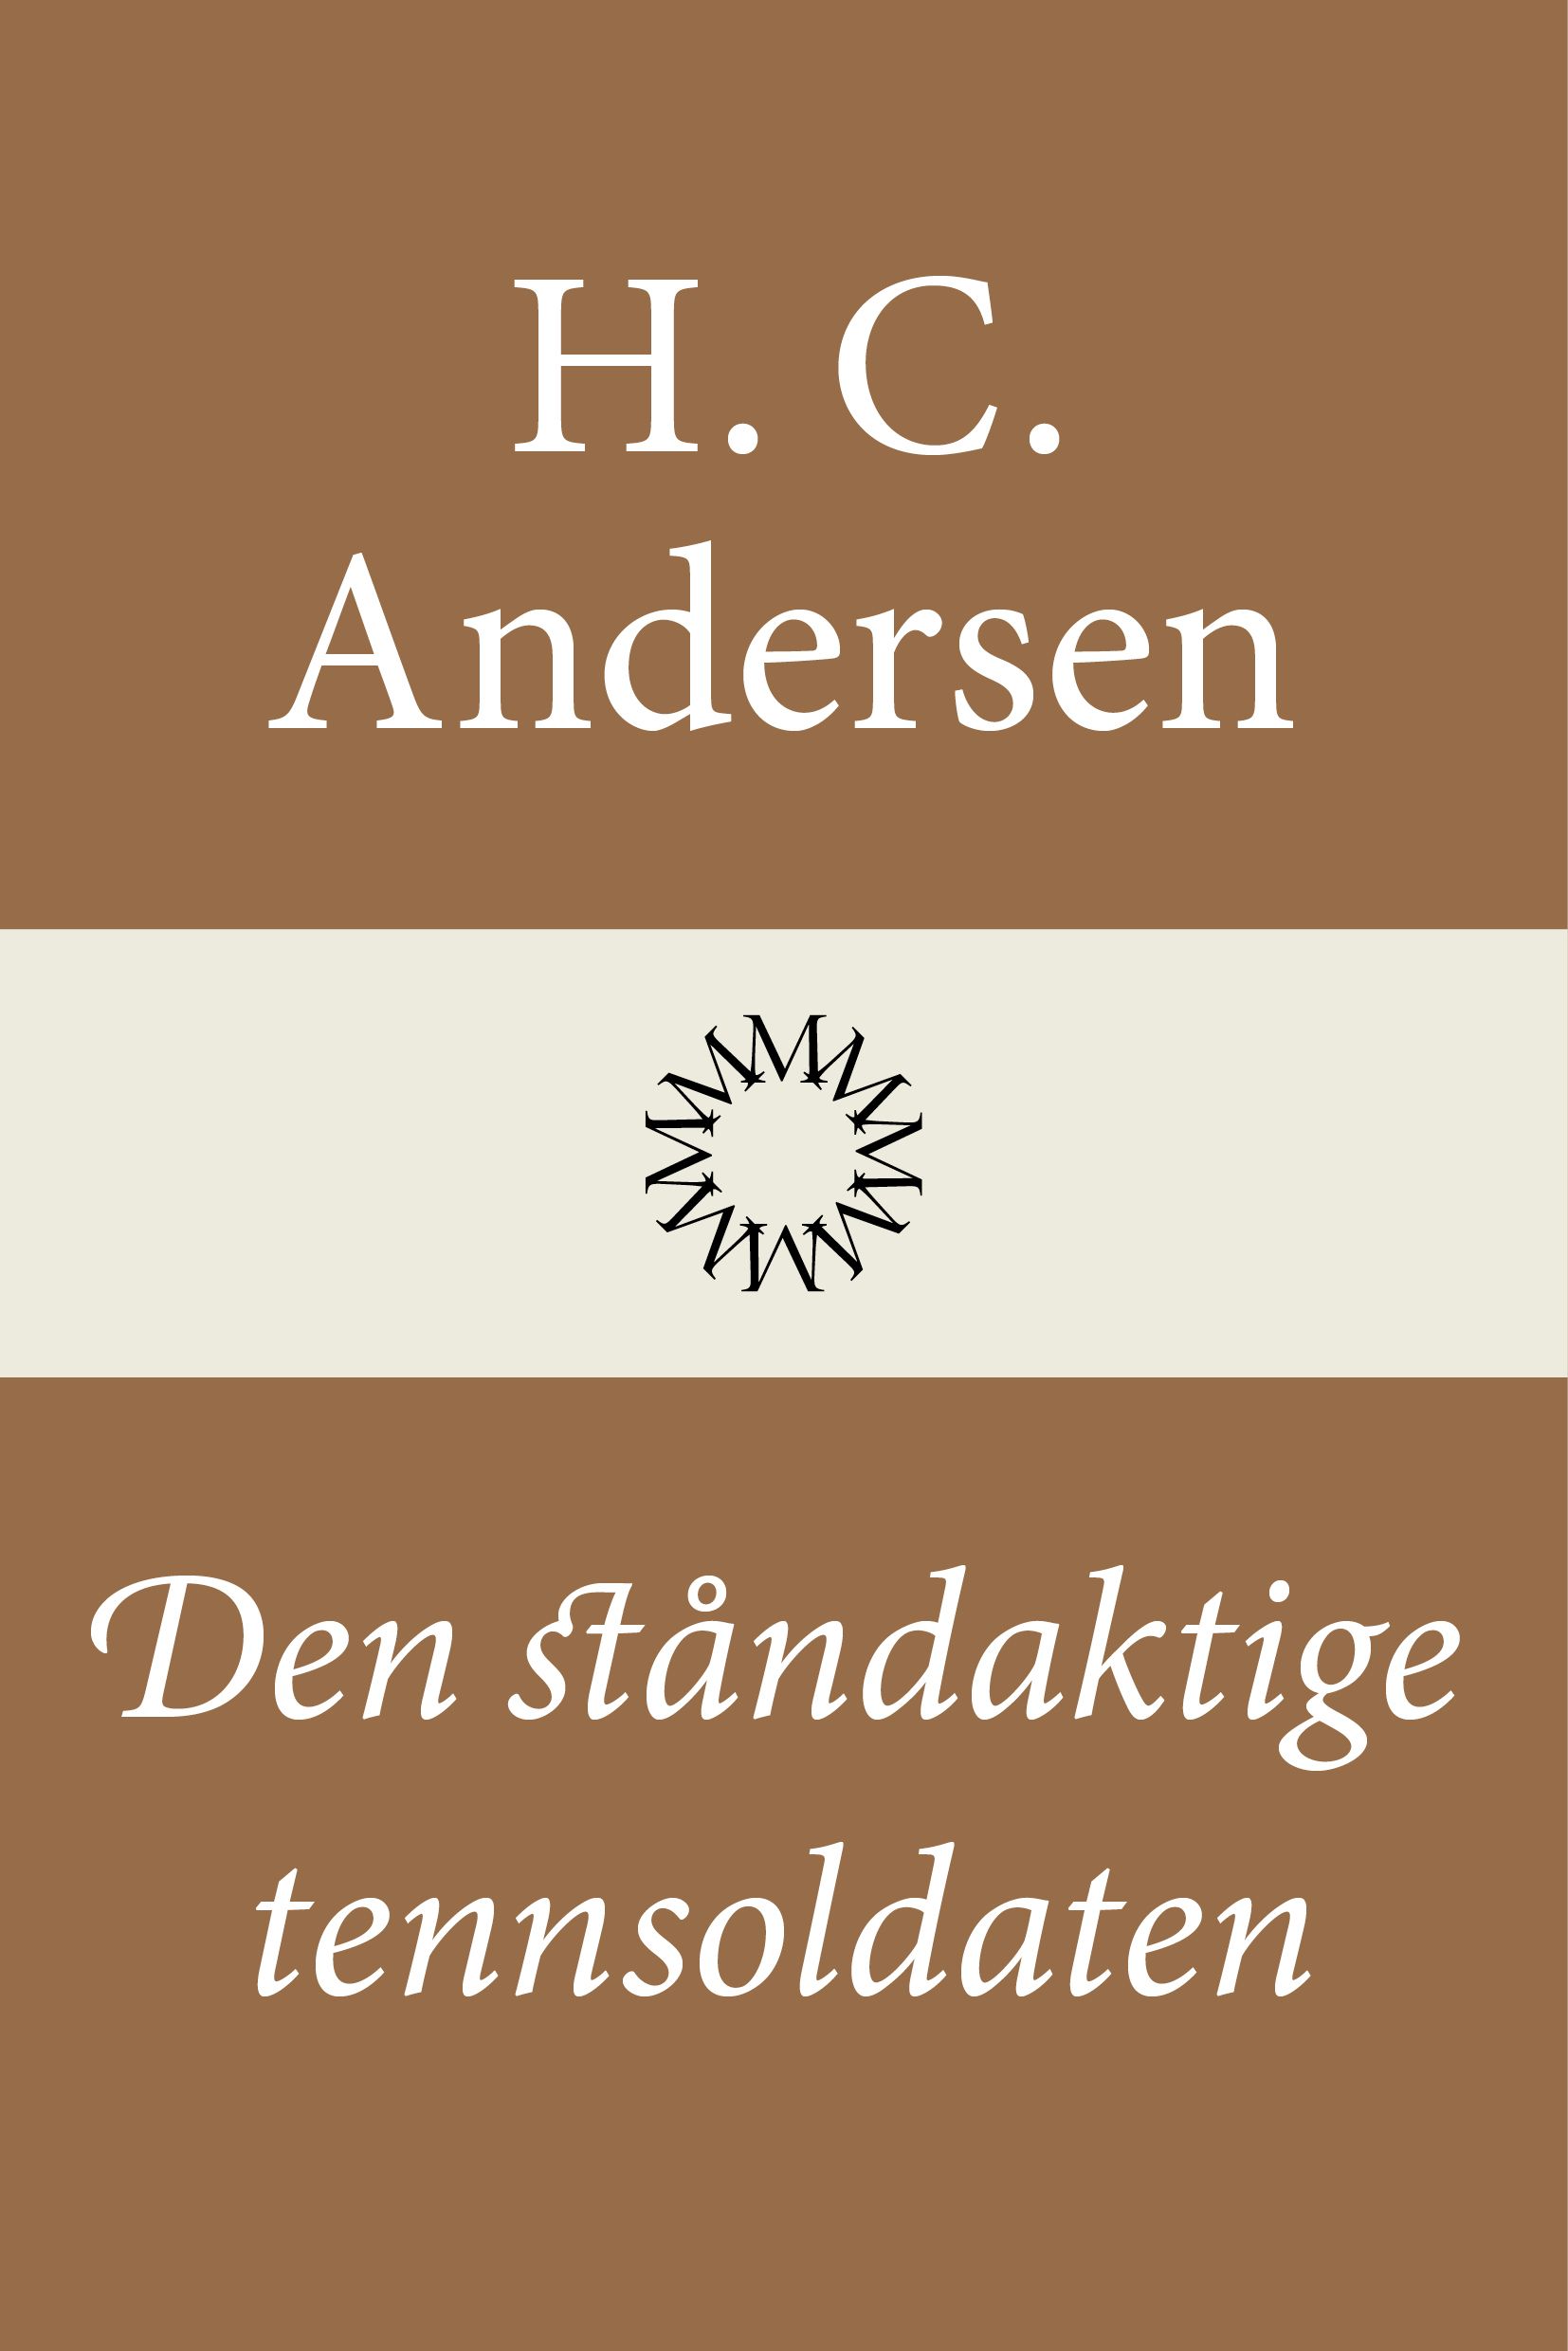 Den ståndaktige tennsoldaten, e-bok av H. C. Andersen